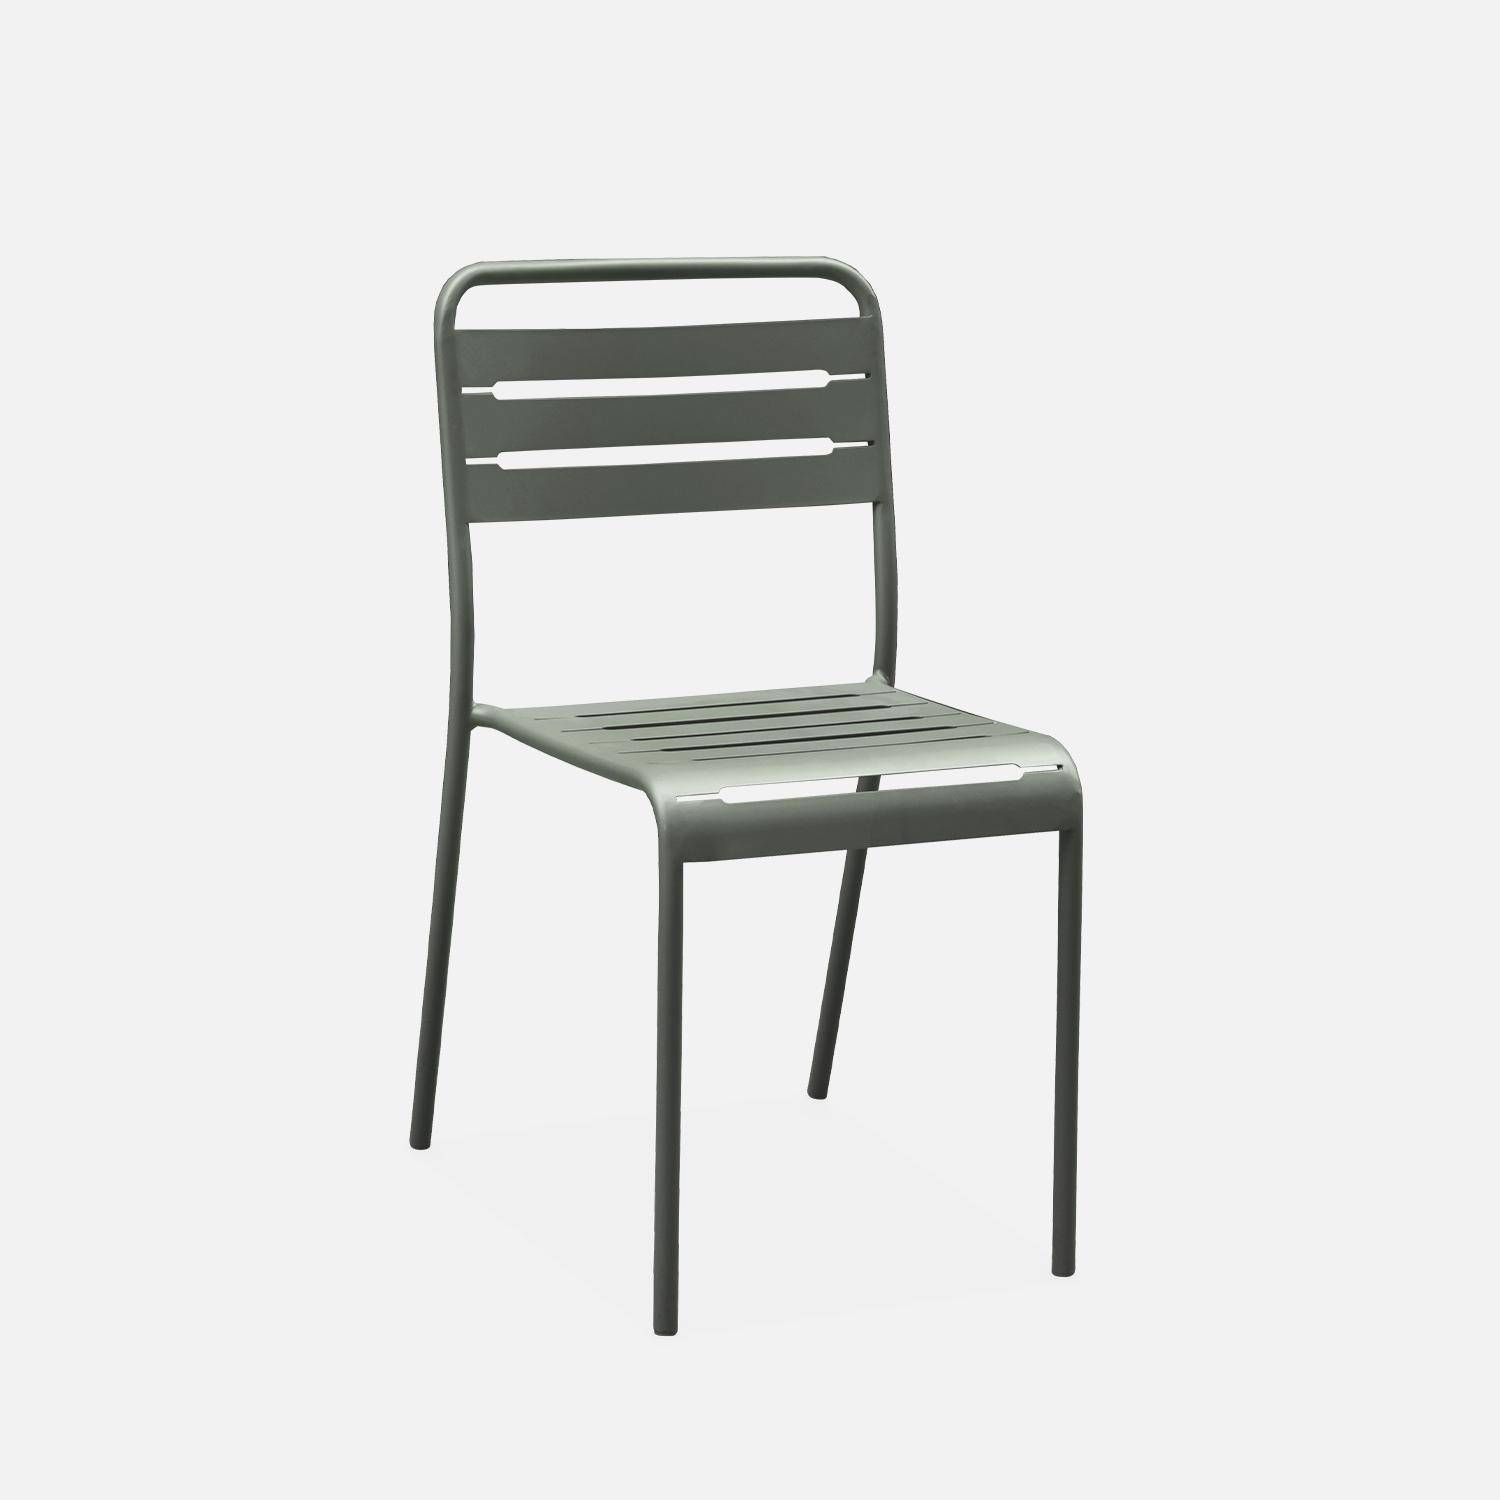 6-8 seater rectangular steel garden table set with chairs, 160cm, khaki green,sweeek,Photo6